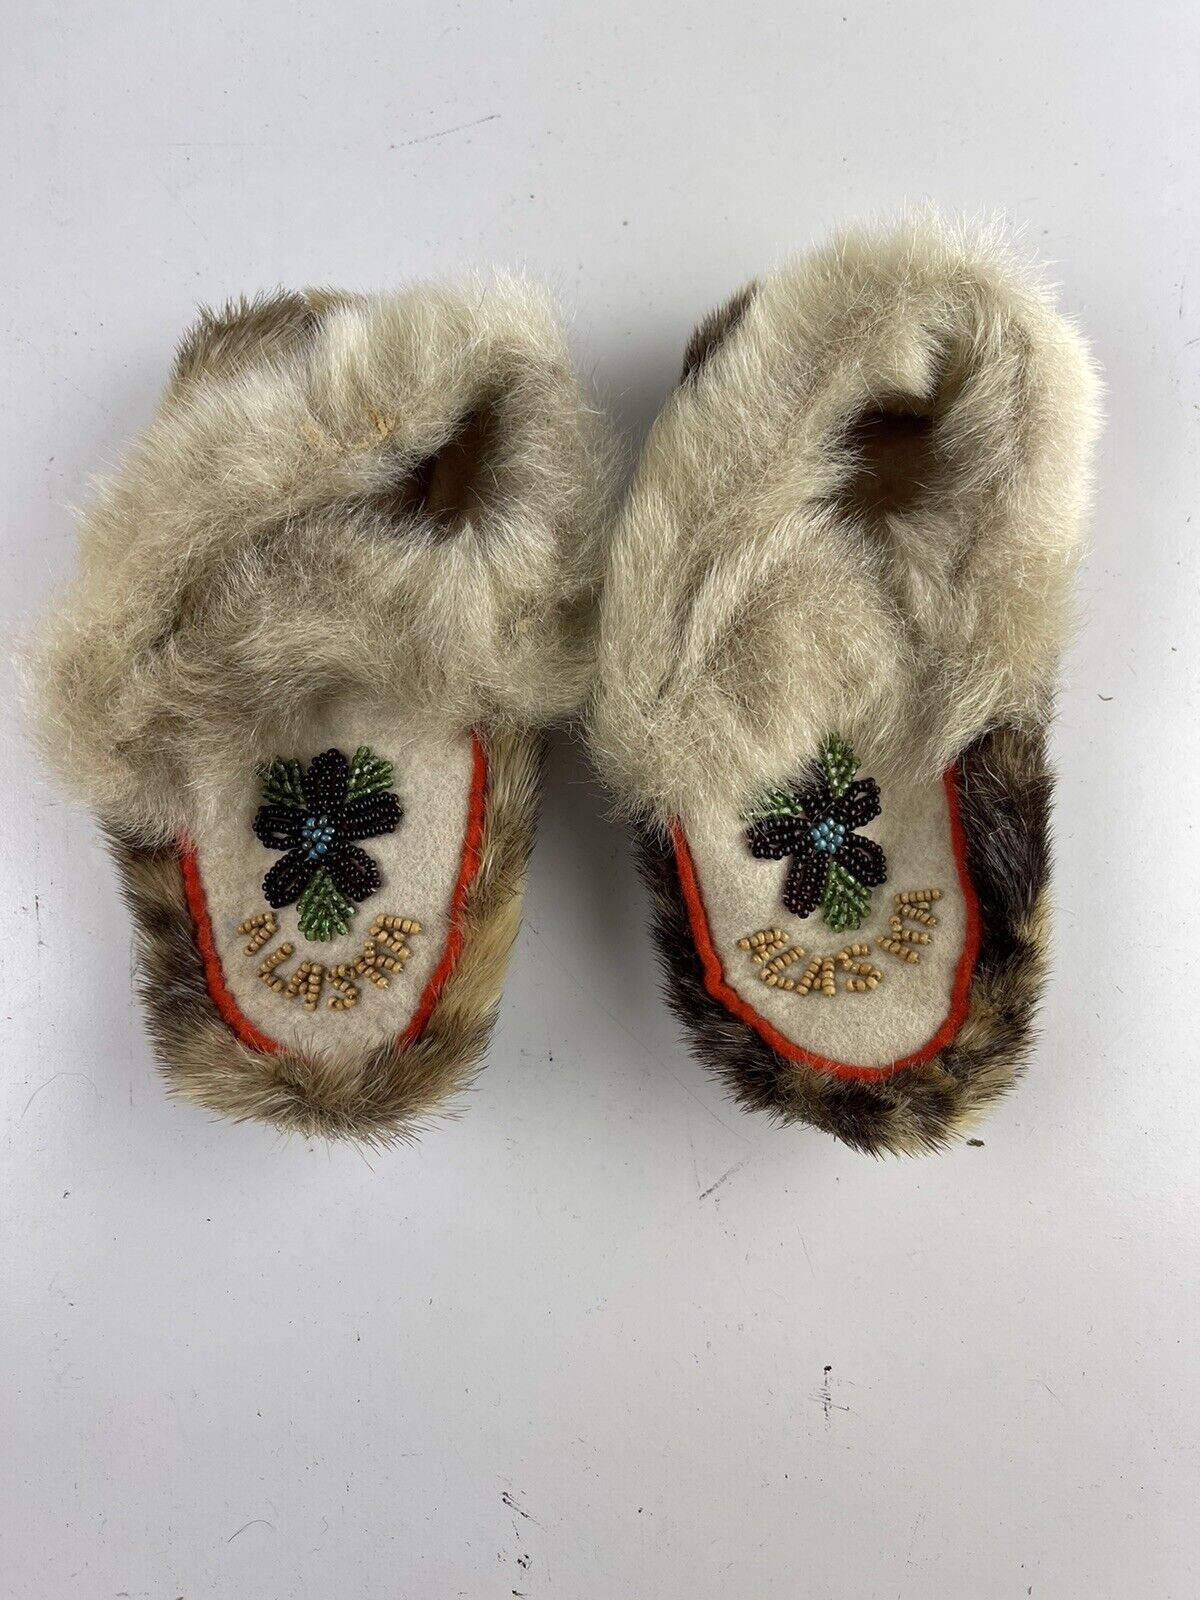 Vintage Alaskan Eskimo Native American Fur Moccasins - Beaded - 6” Long 3” Wide